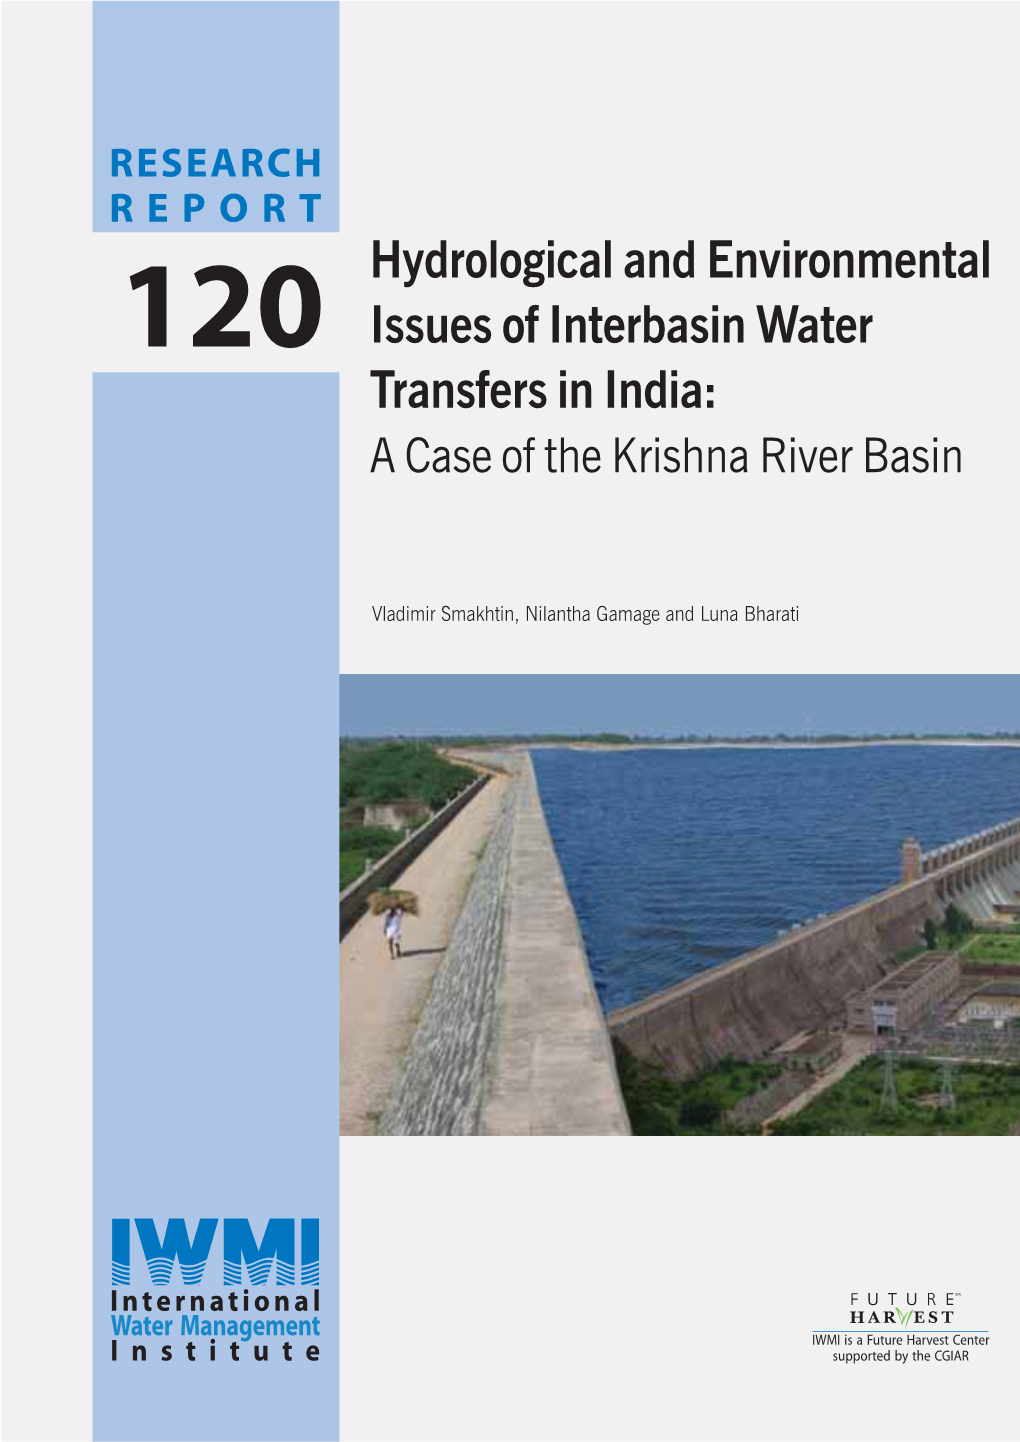 A Case of the Krishna River Basin